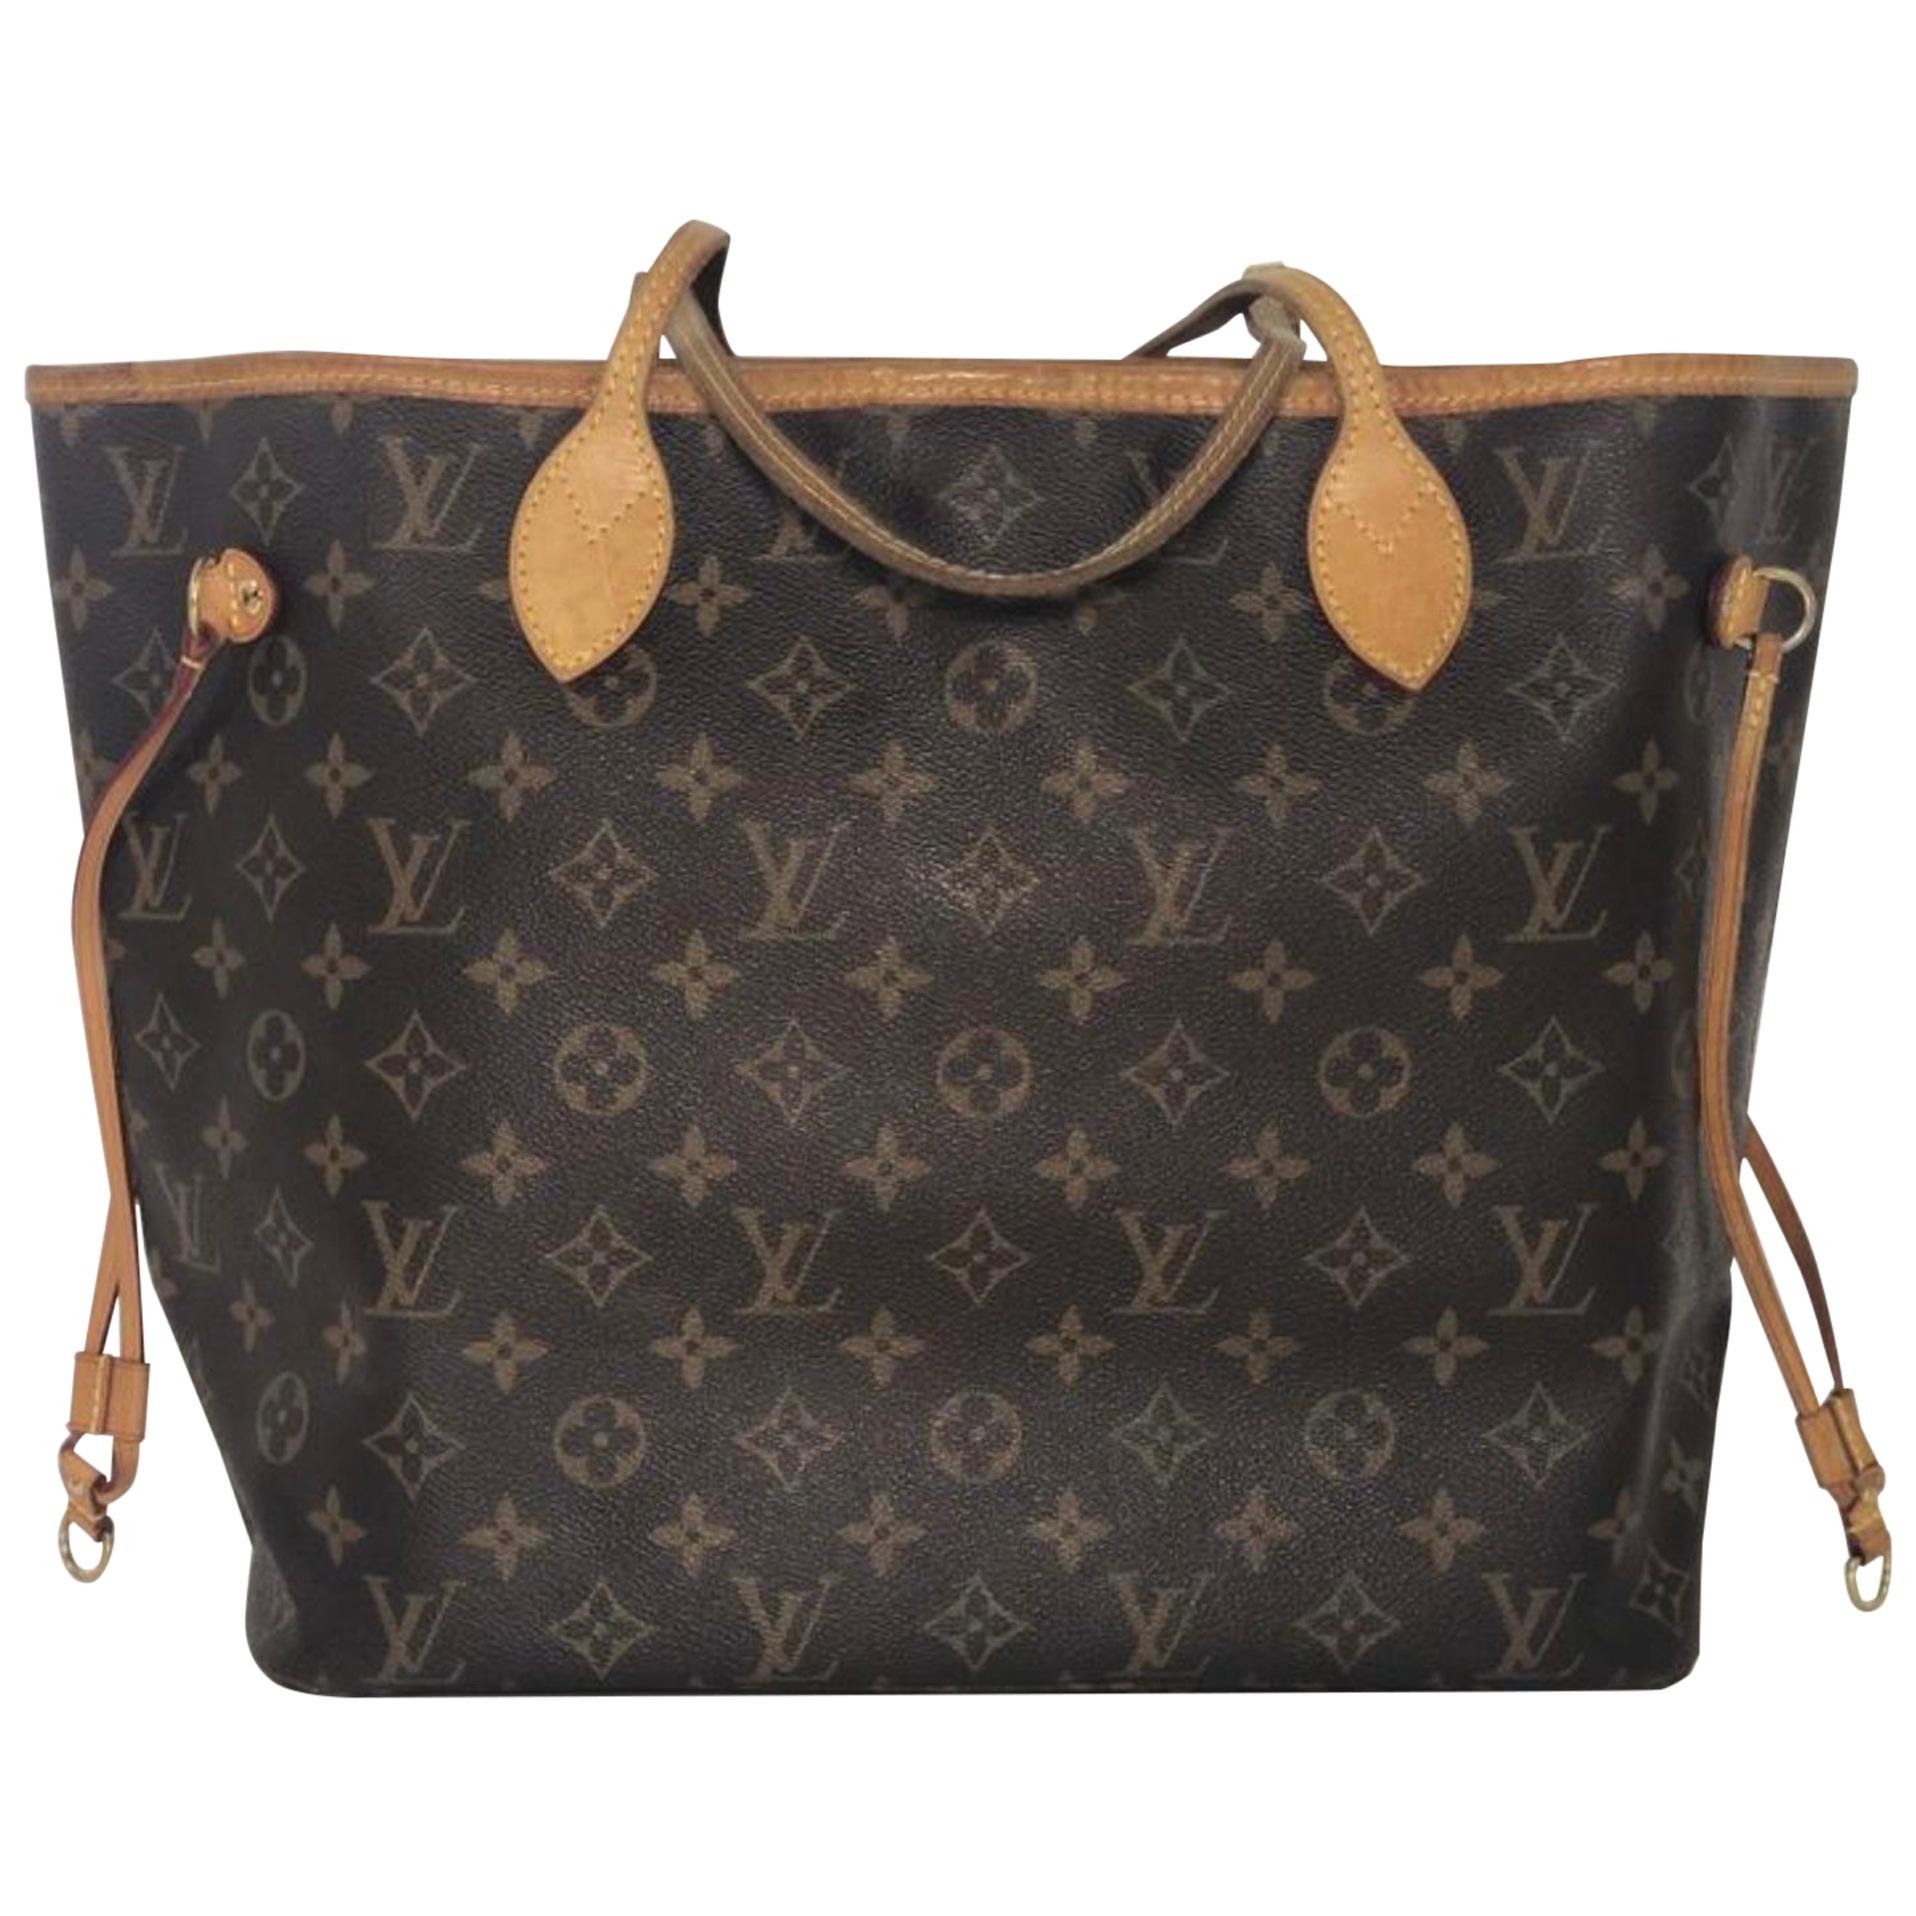  Louis Vuitton Monogram Neverfull MM Tote Shoulder Handbag For Sale